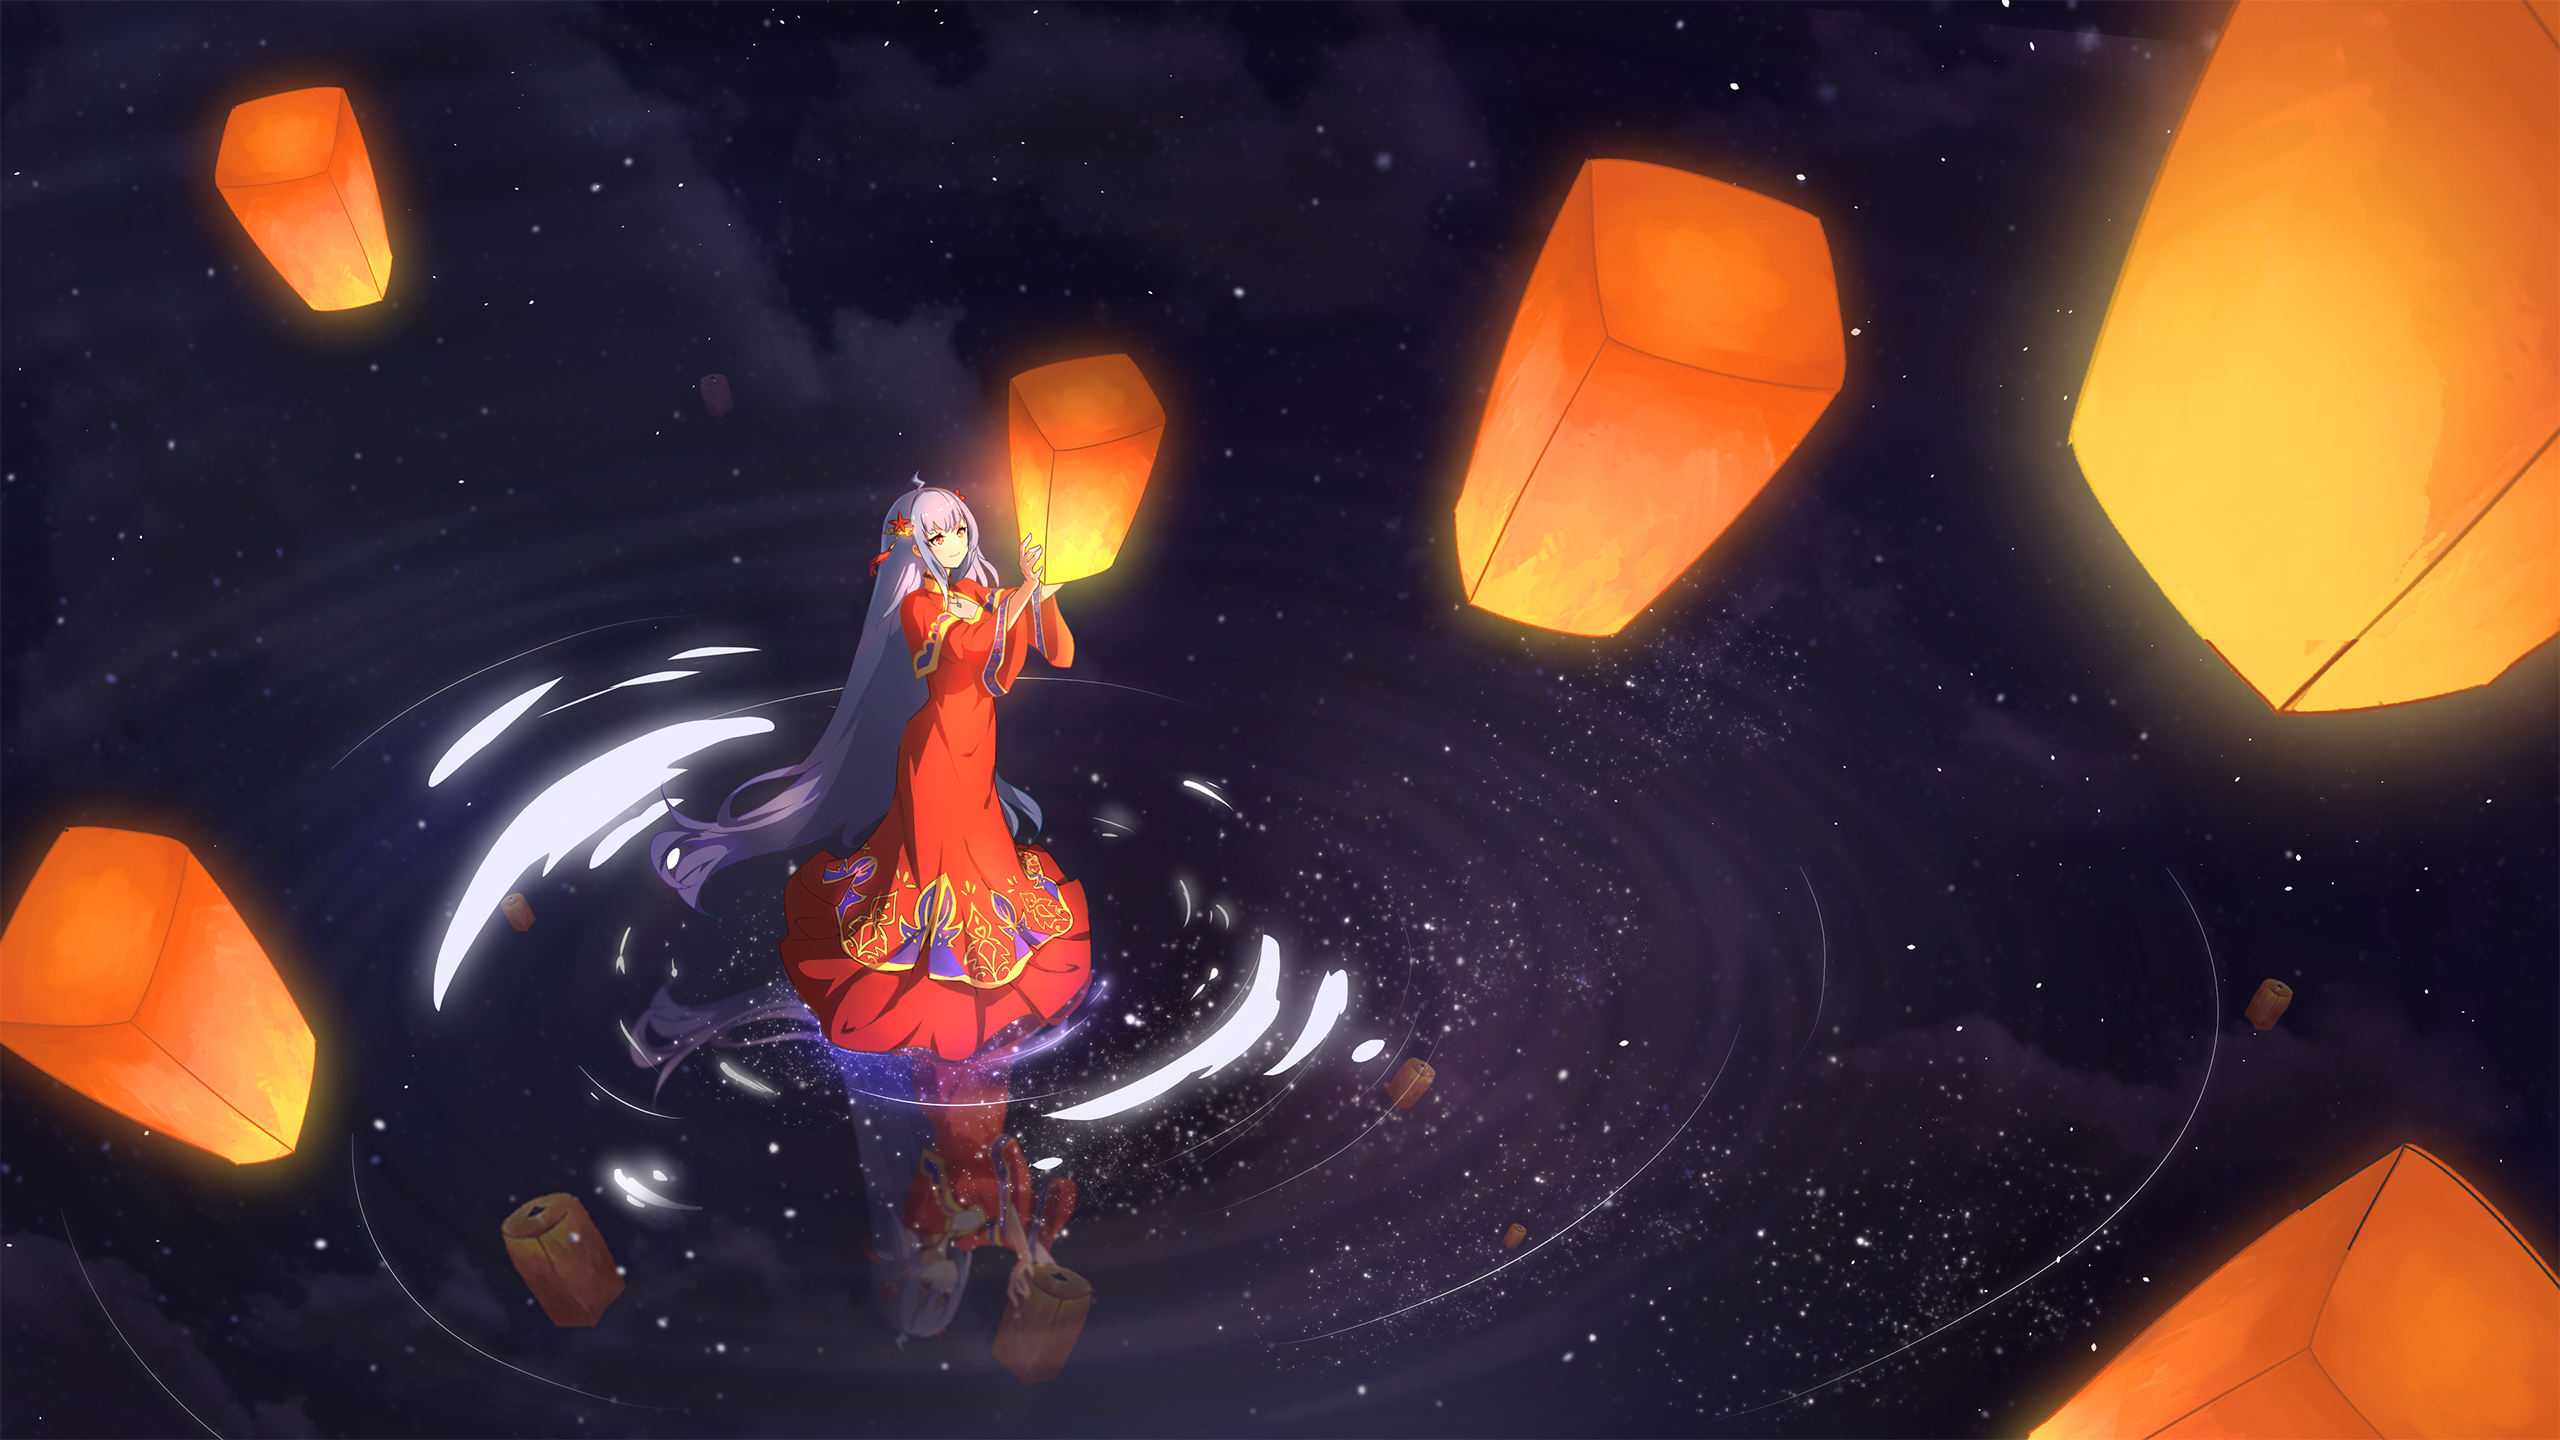 Bilibili Bilibili Douga Digital Art Anime Girls Water Reflection Lantern Dress 2560x1440